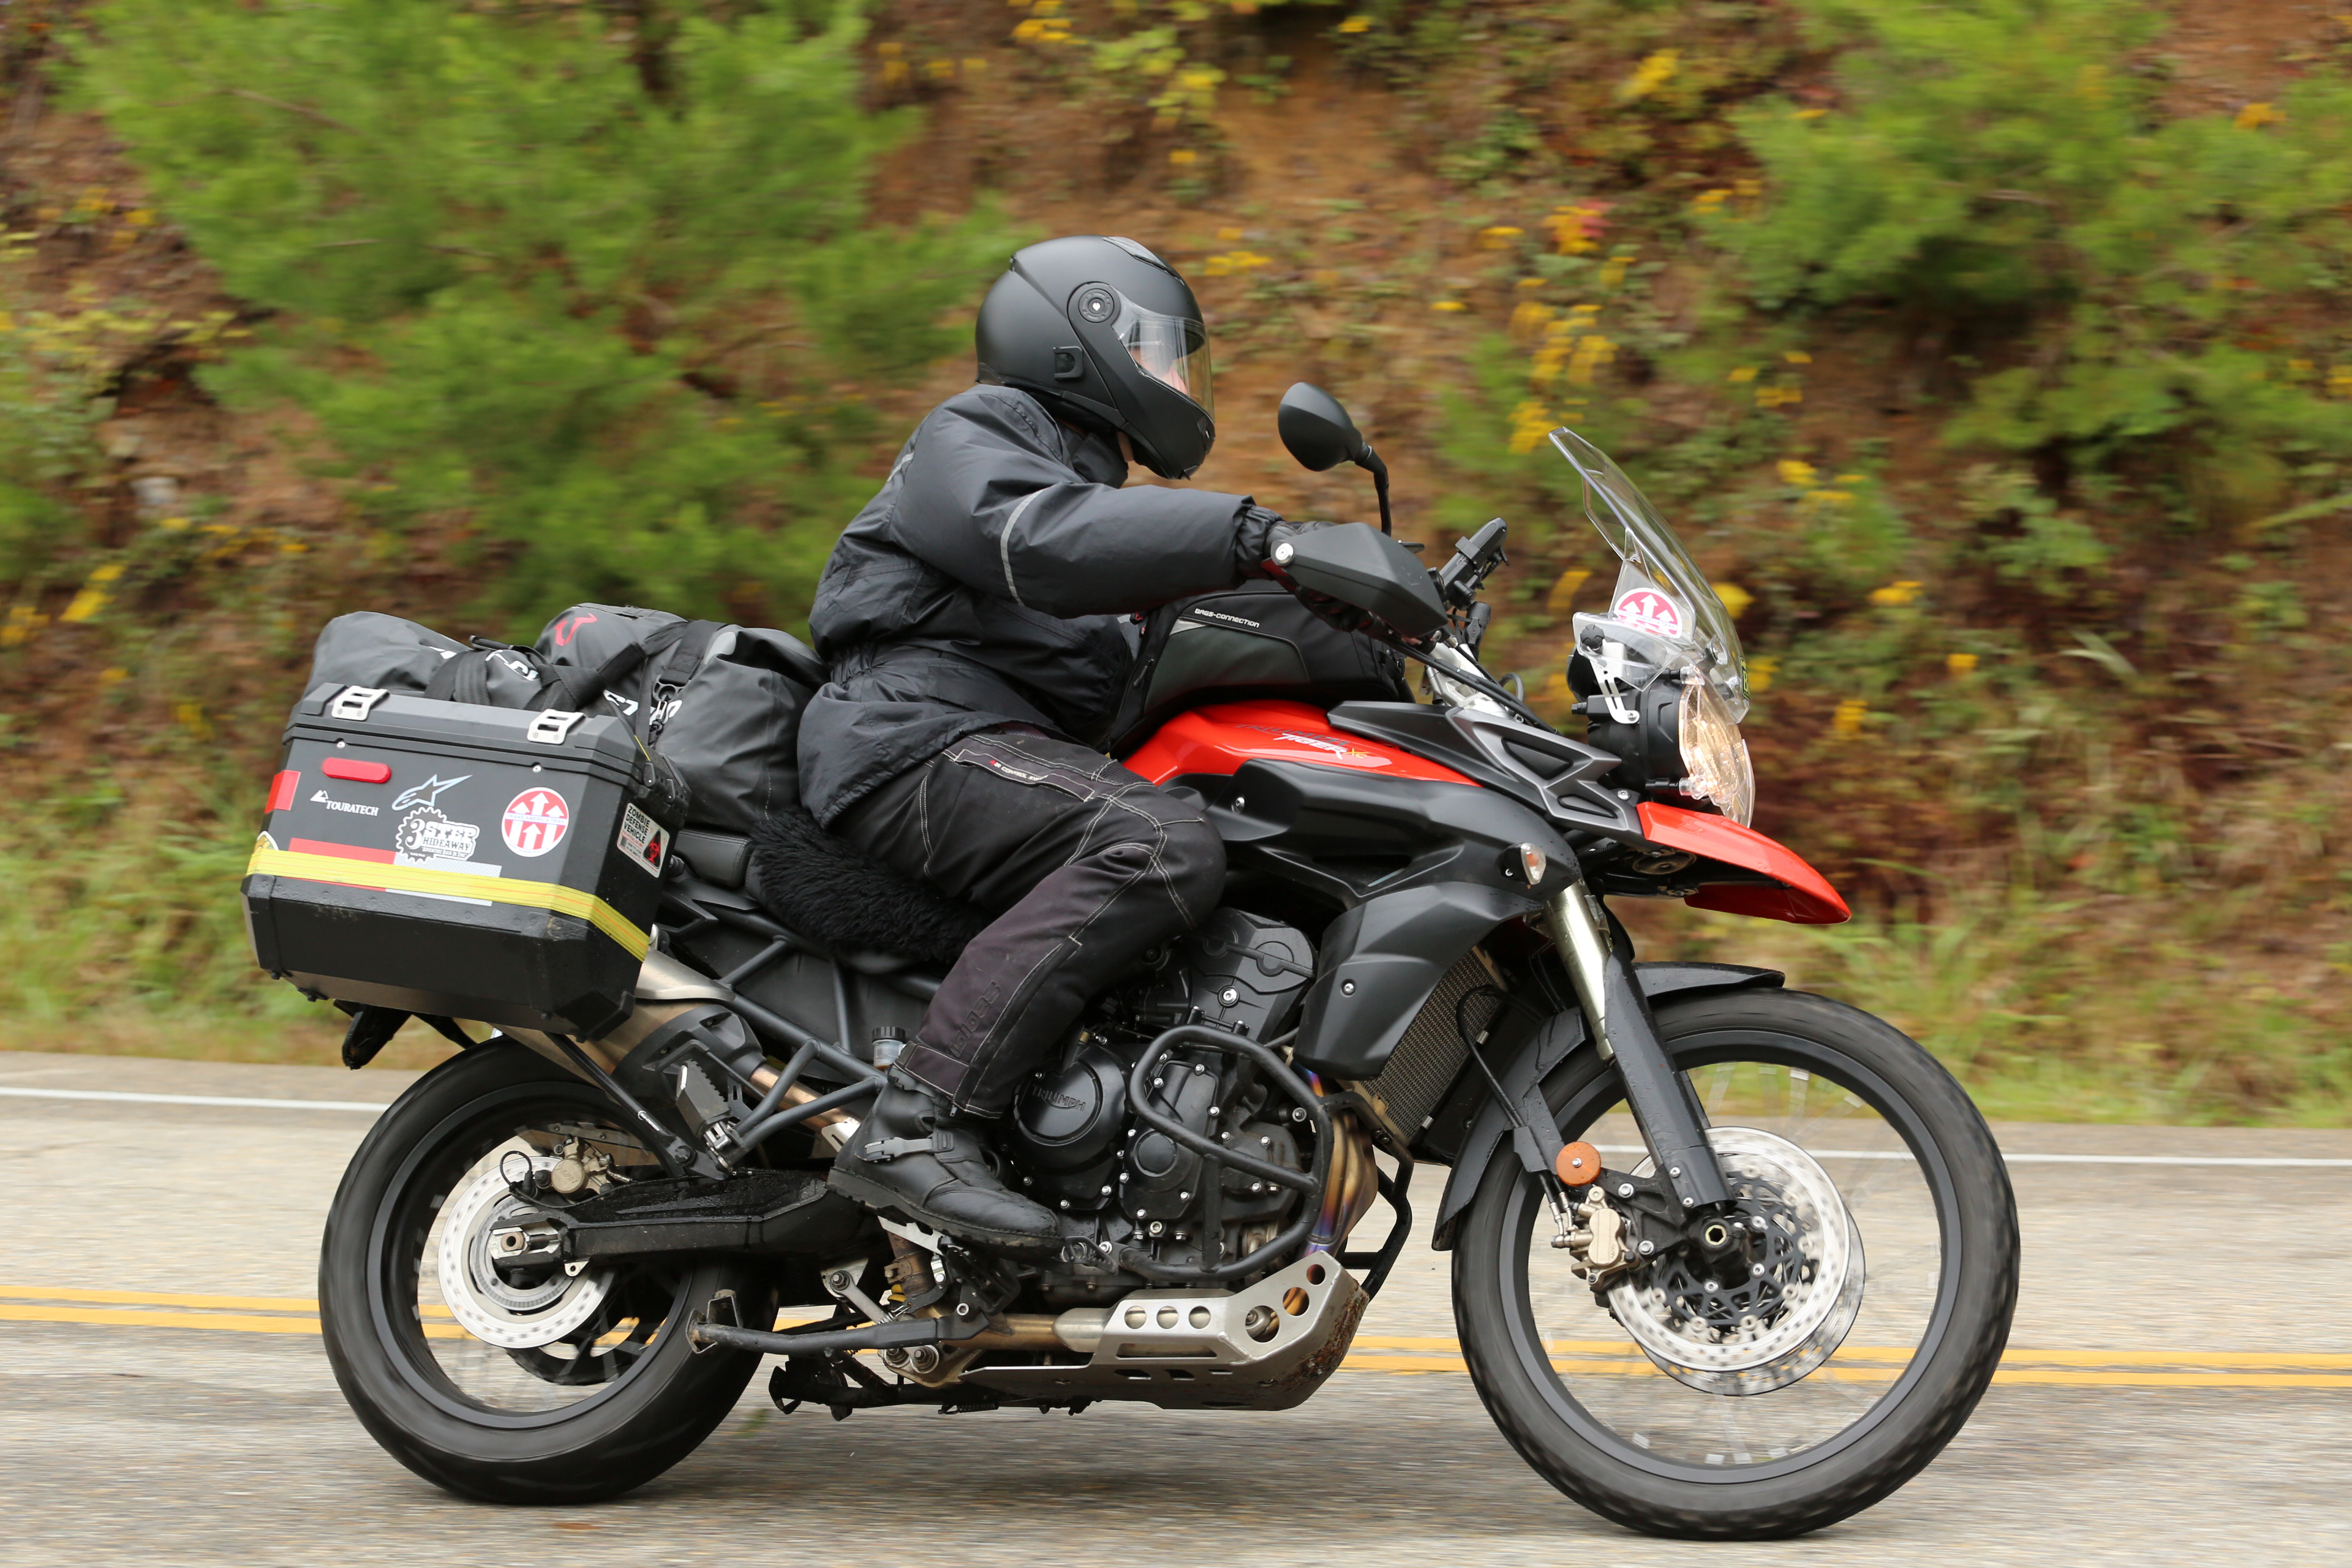 CSC RX3 Adventure motorcycle